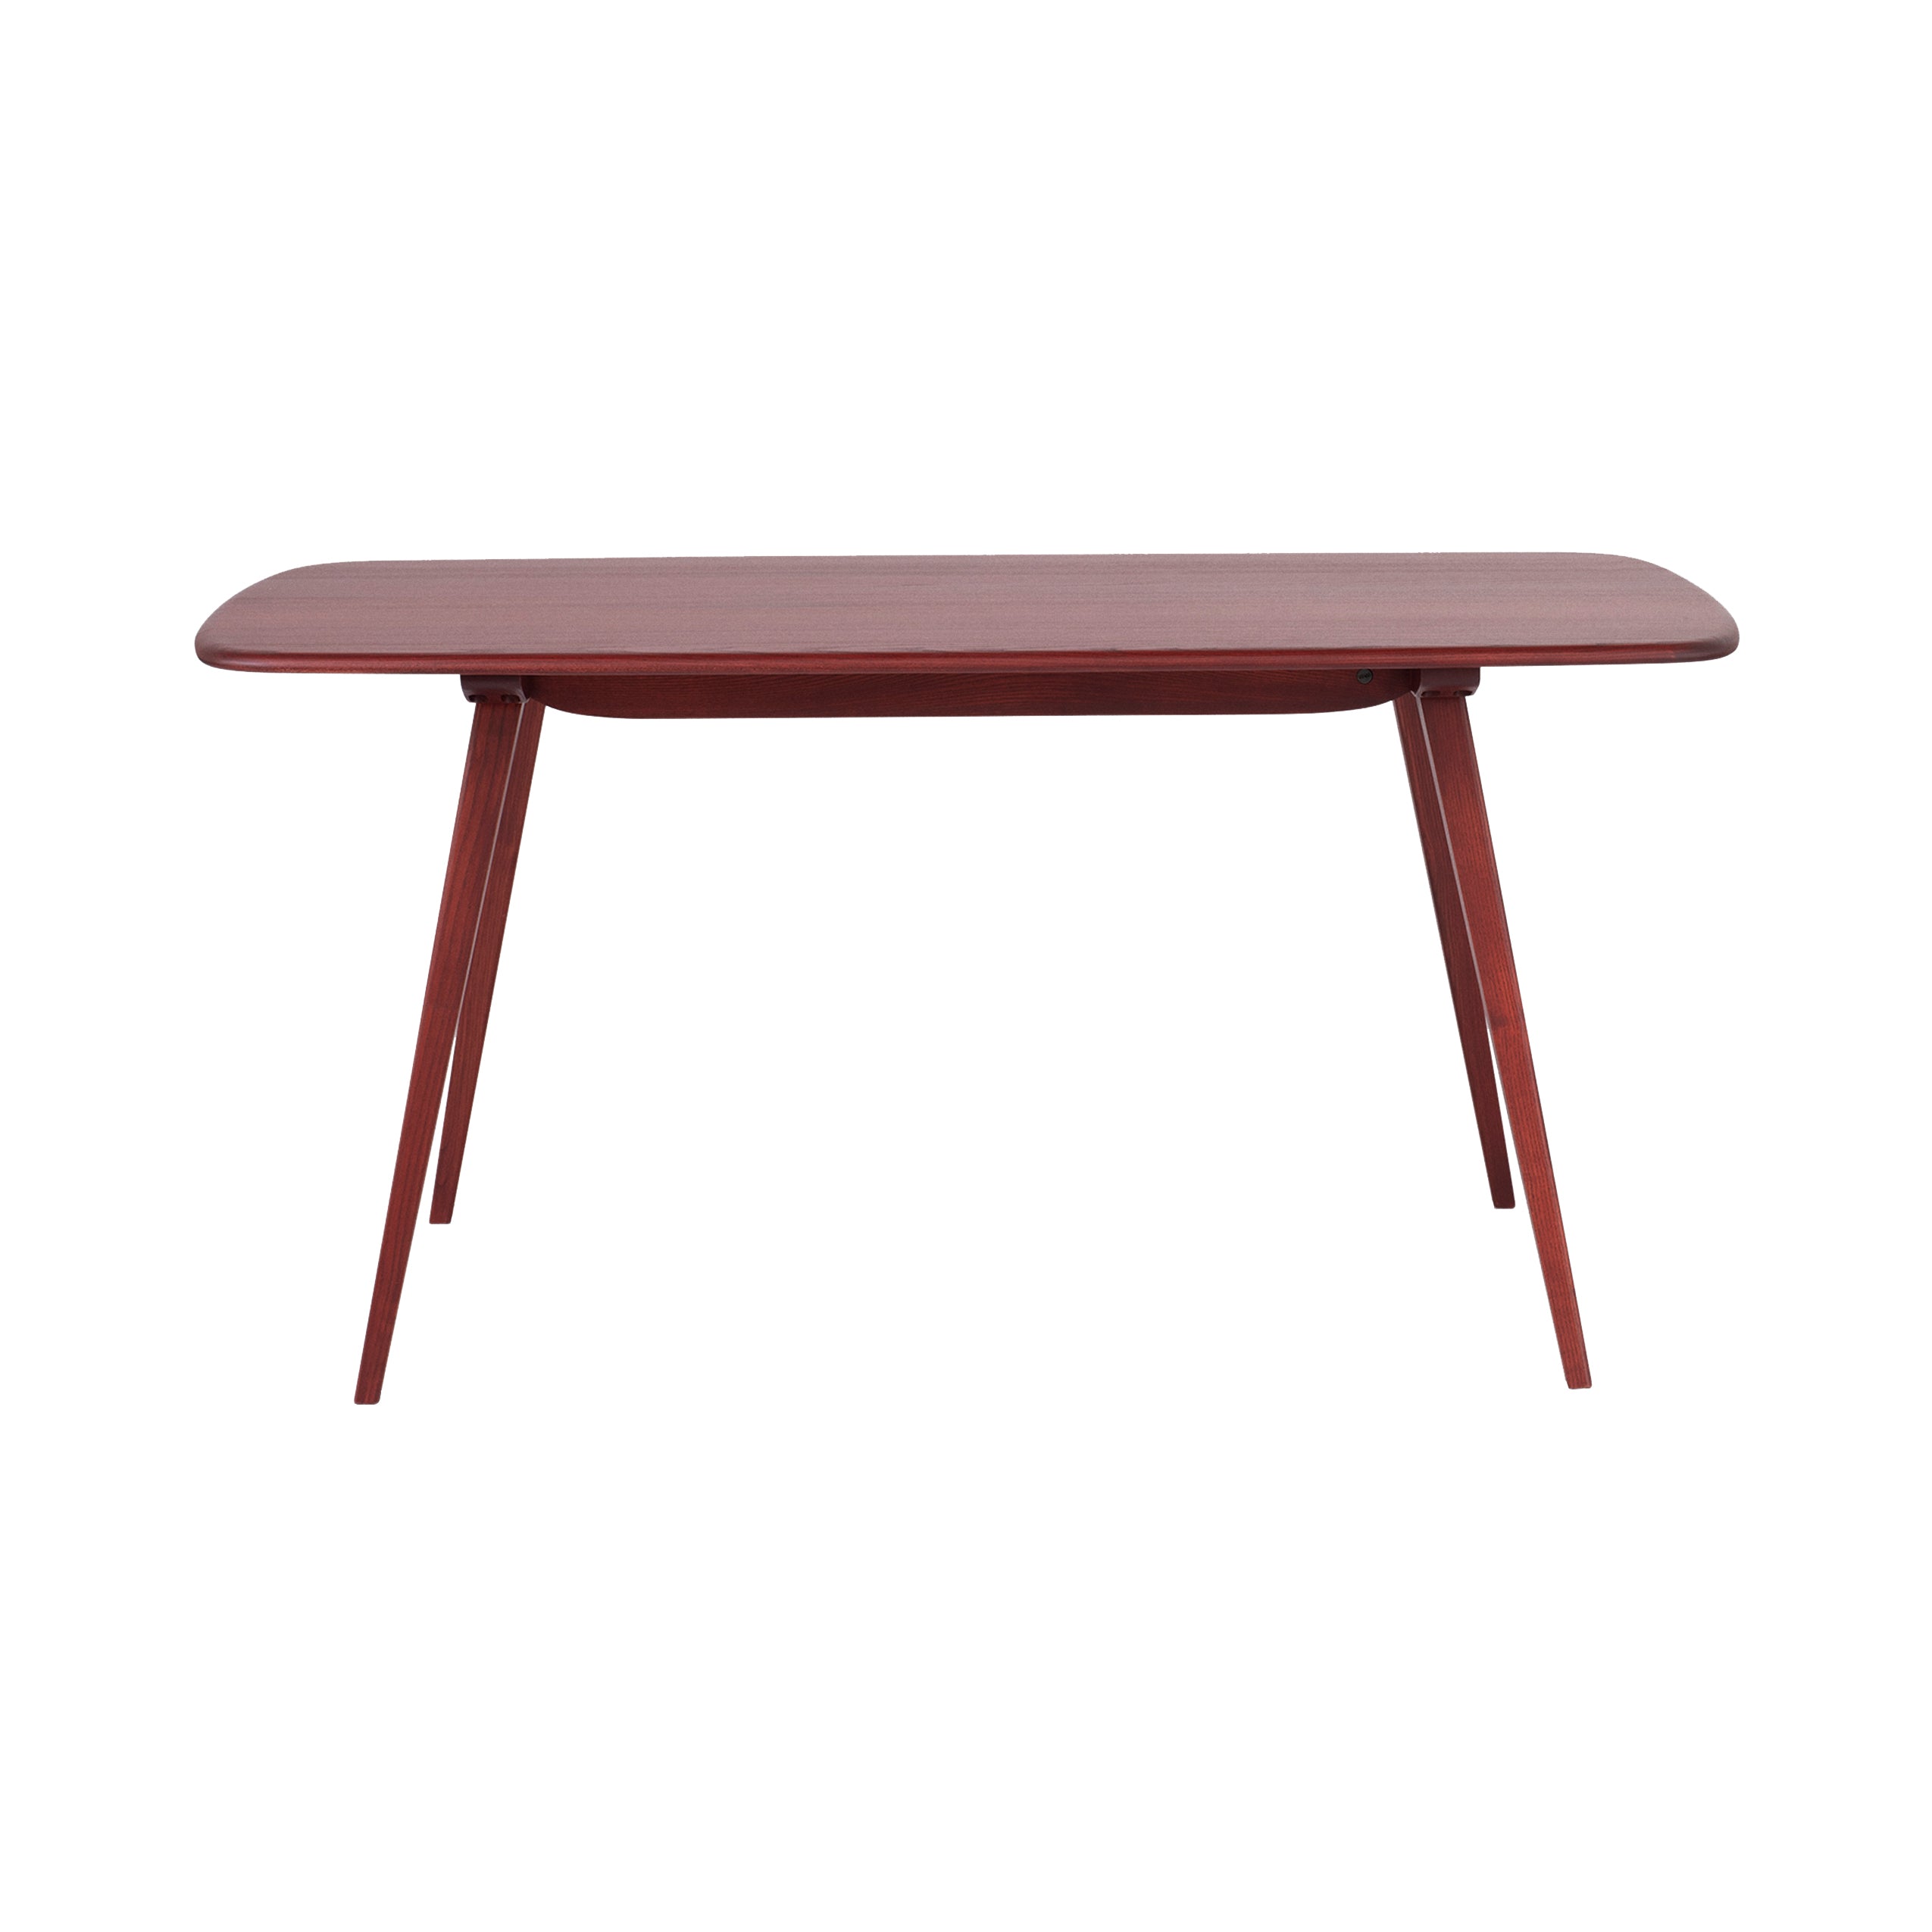 Originals Plank Dining Table: Vintage Red